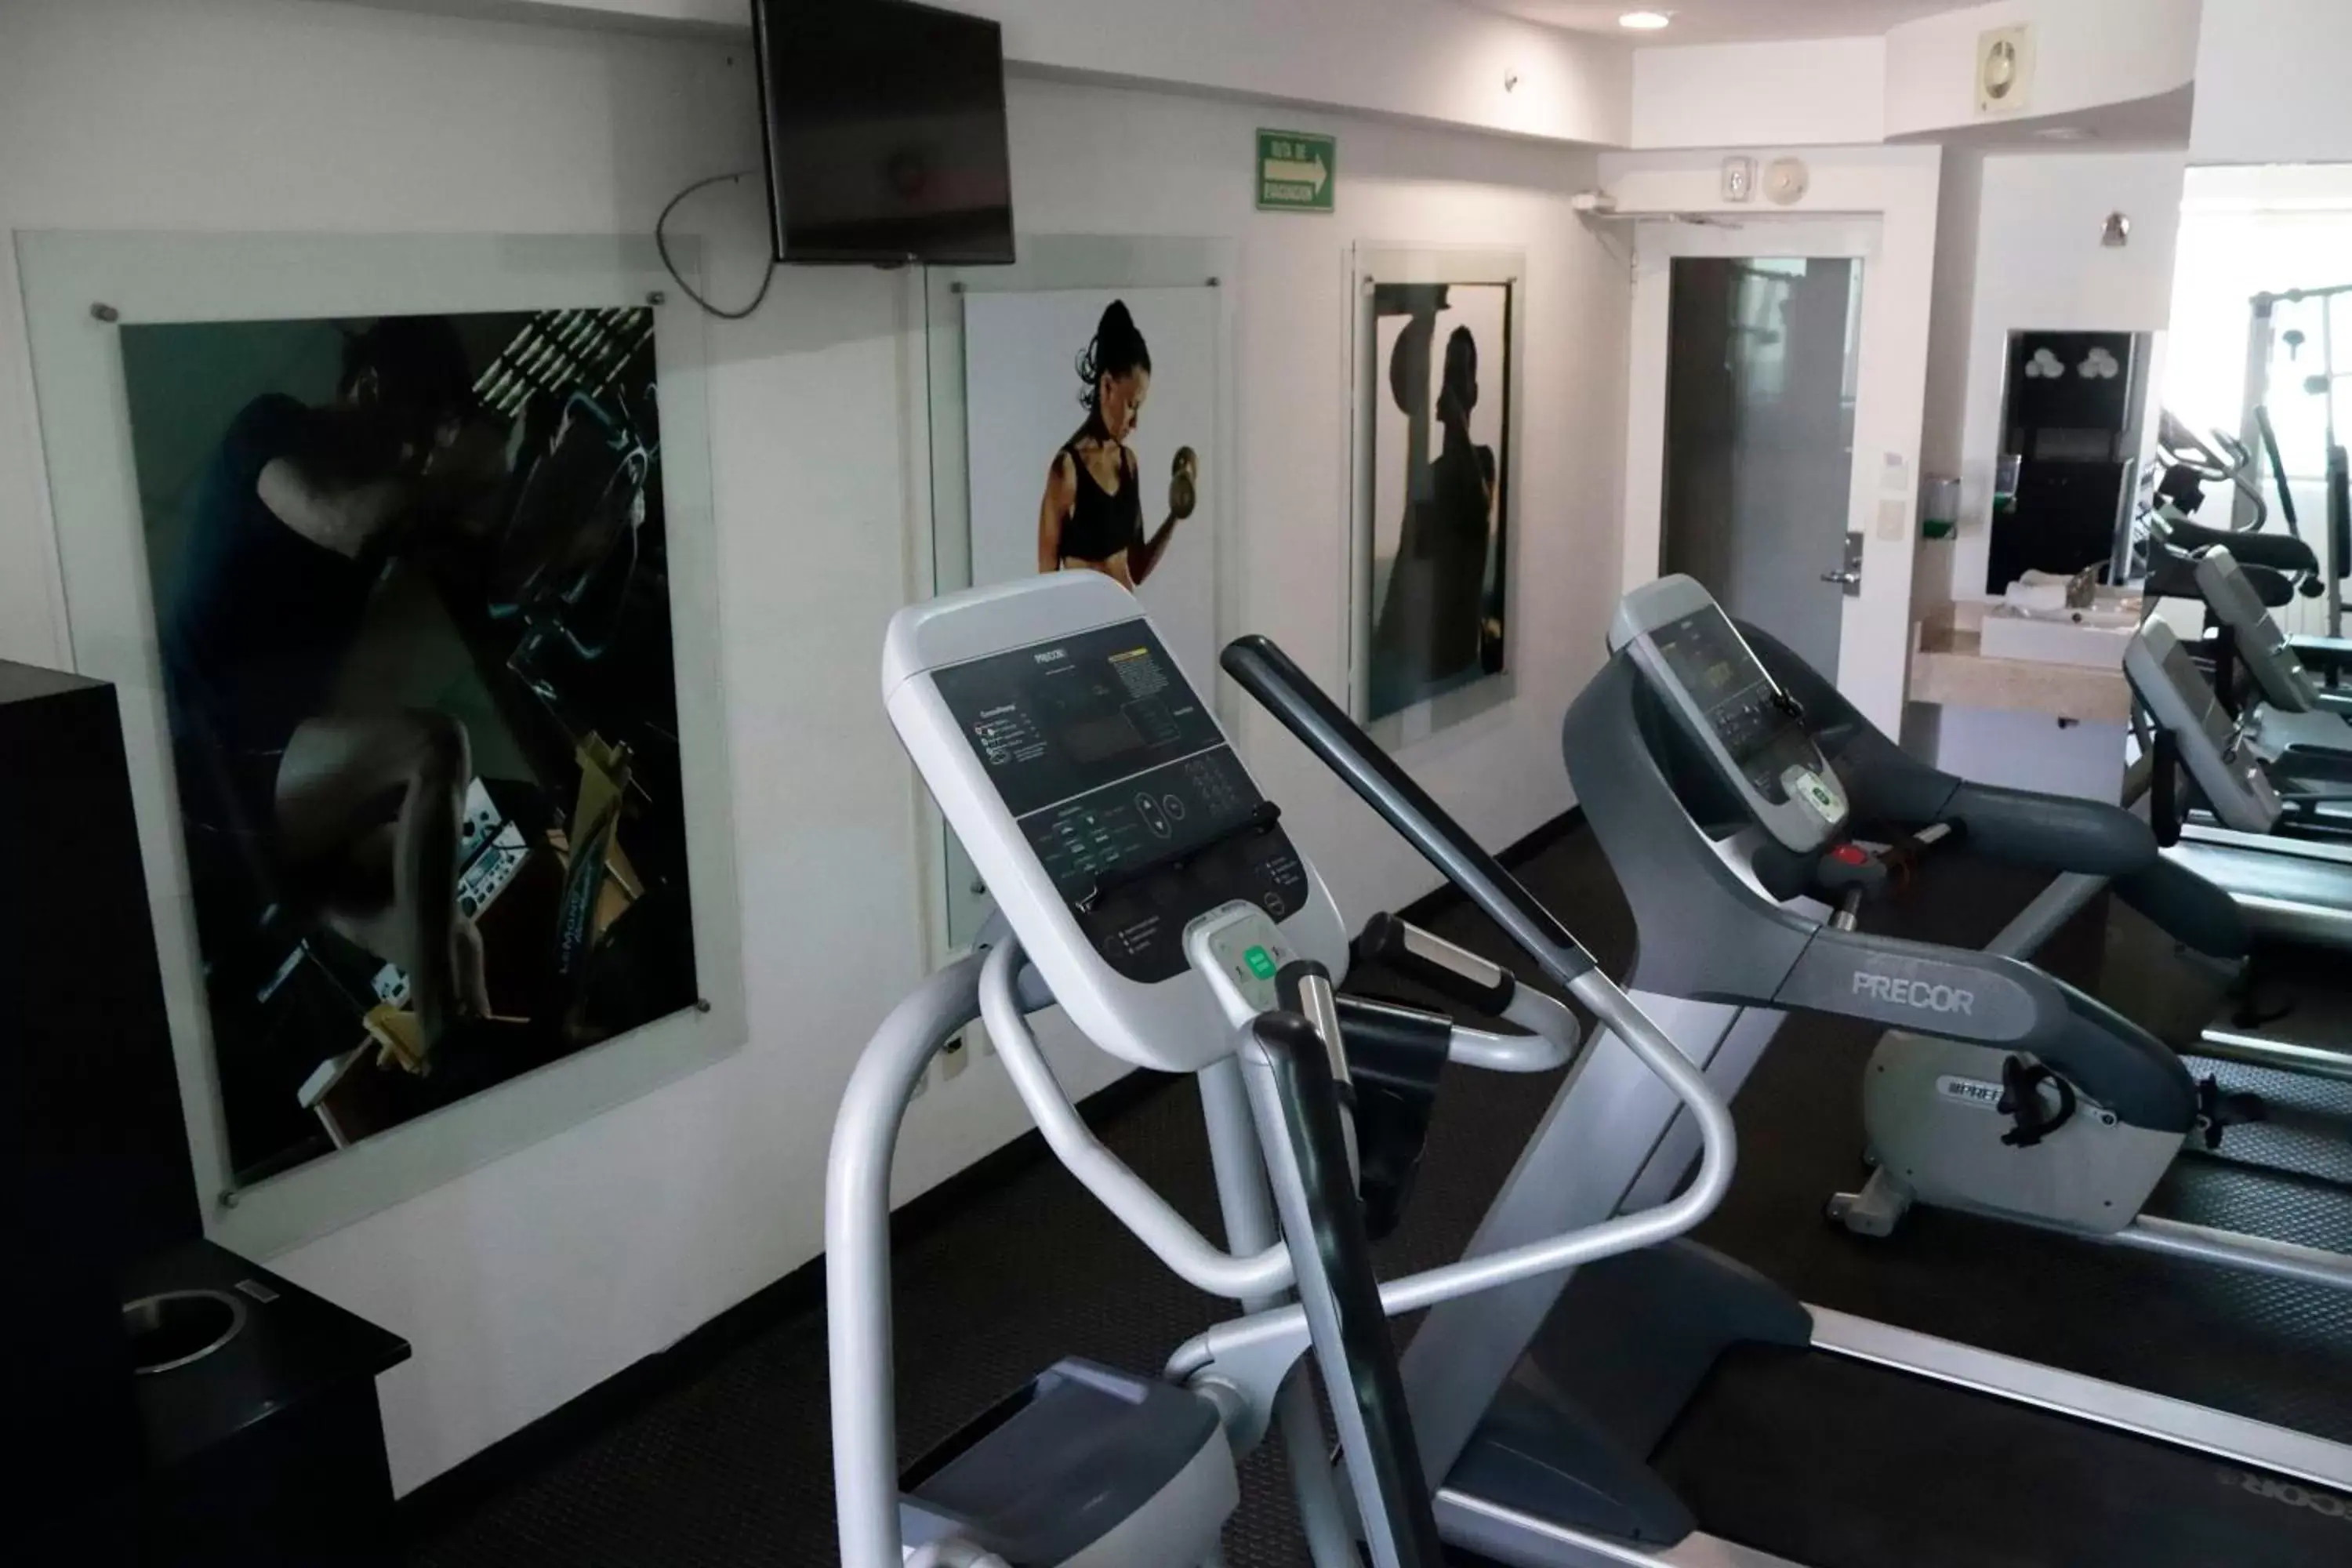 Fitness centre/facilities, Fitness Center/Facilities in Hotel México Plaza Irapuato